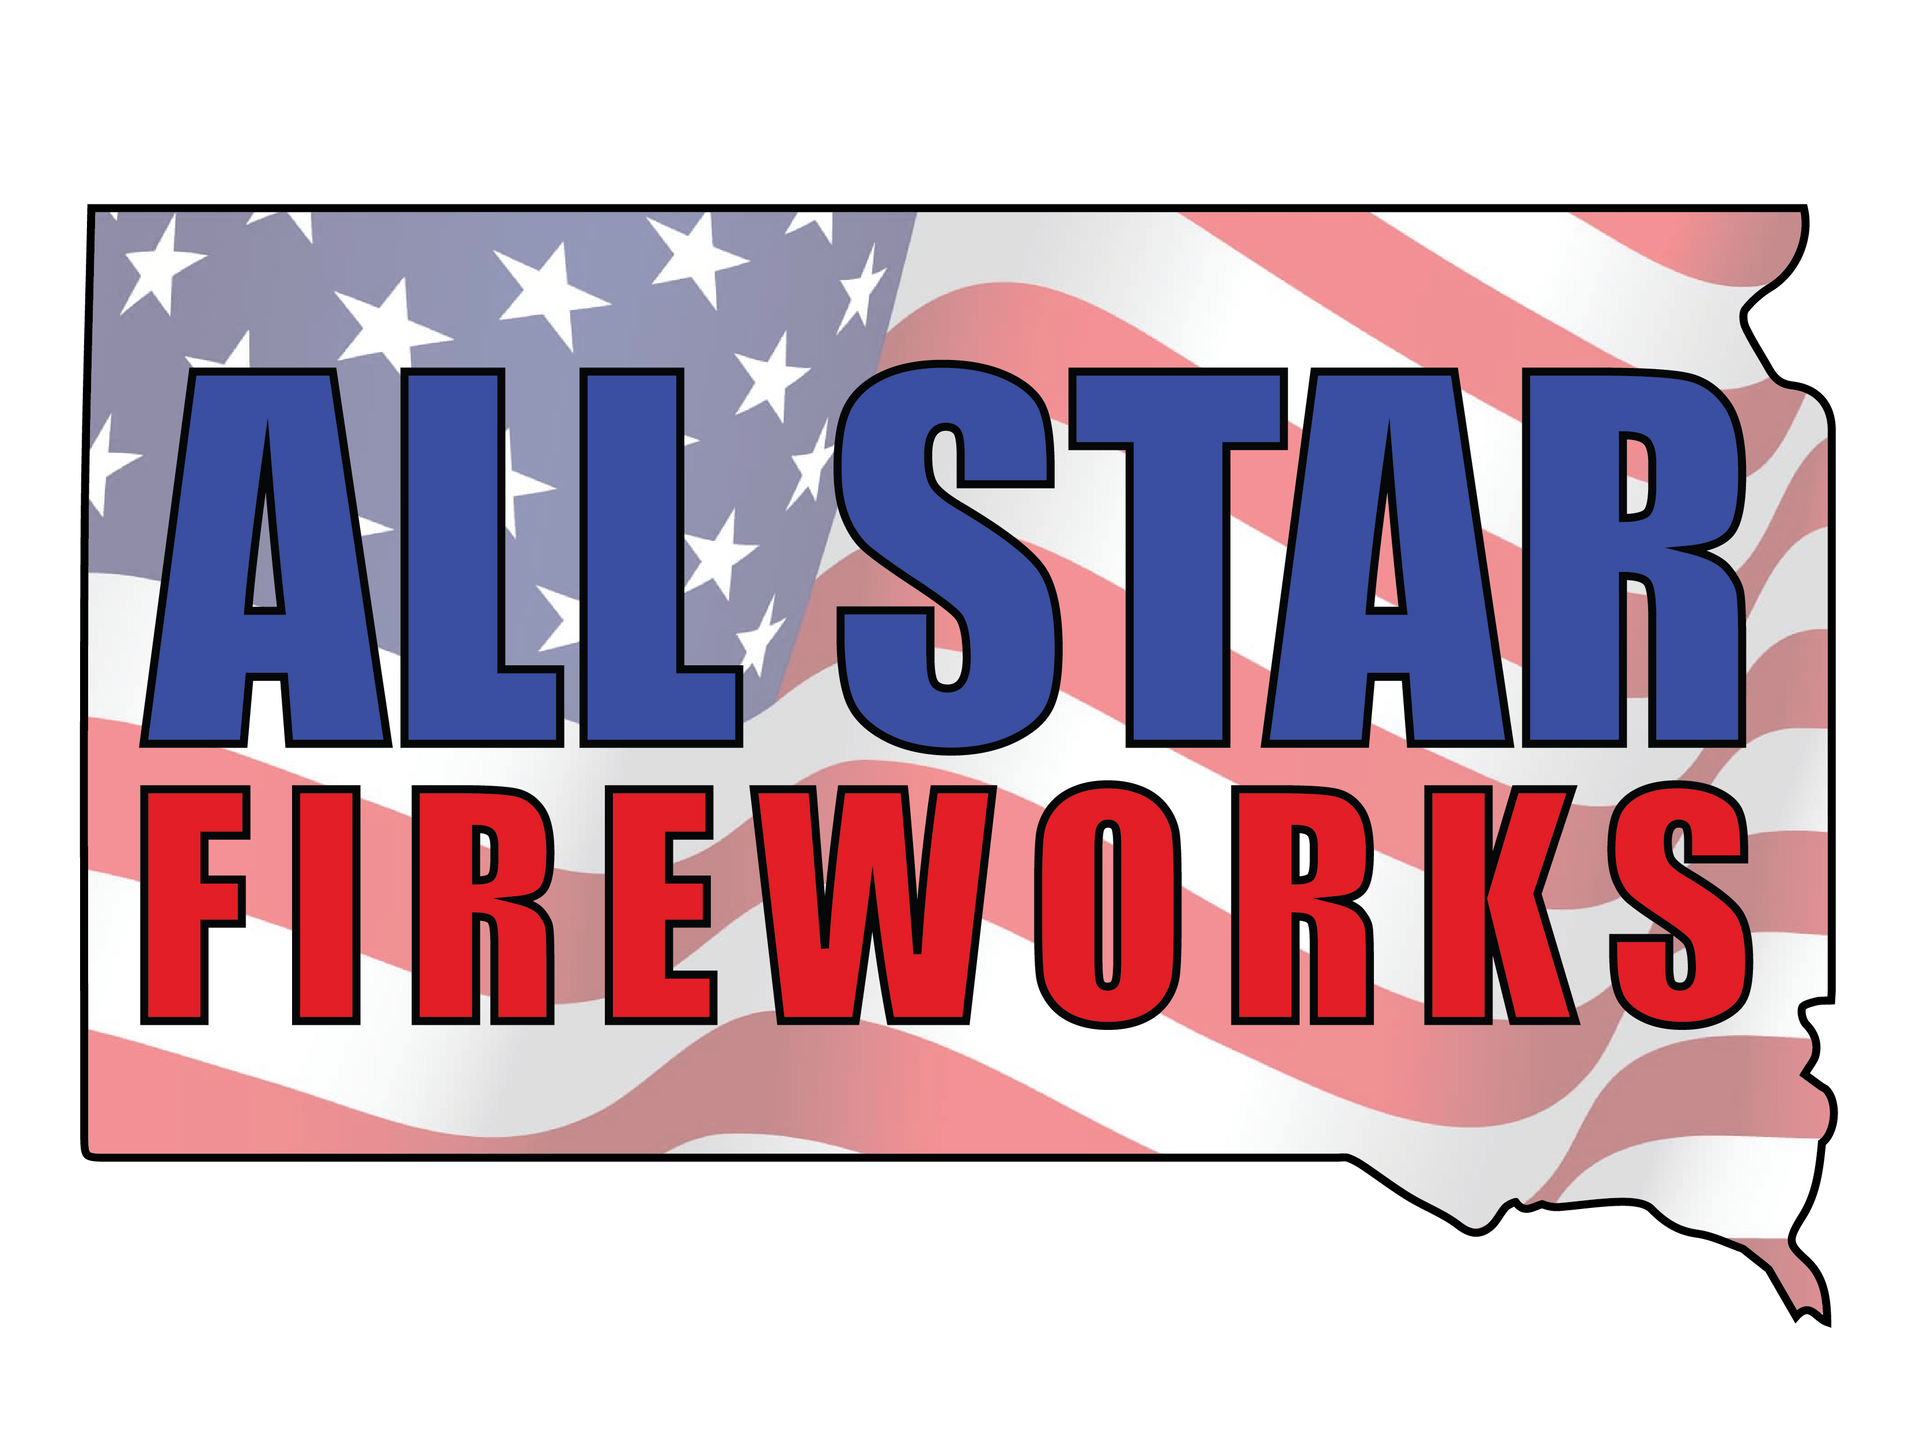 All Star Fireworks Logo - a fireworks store near me for Sioux Falls, Harrisburg, Tea & surrounding communities.